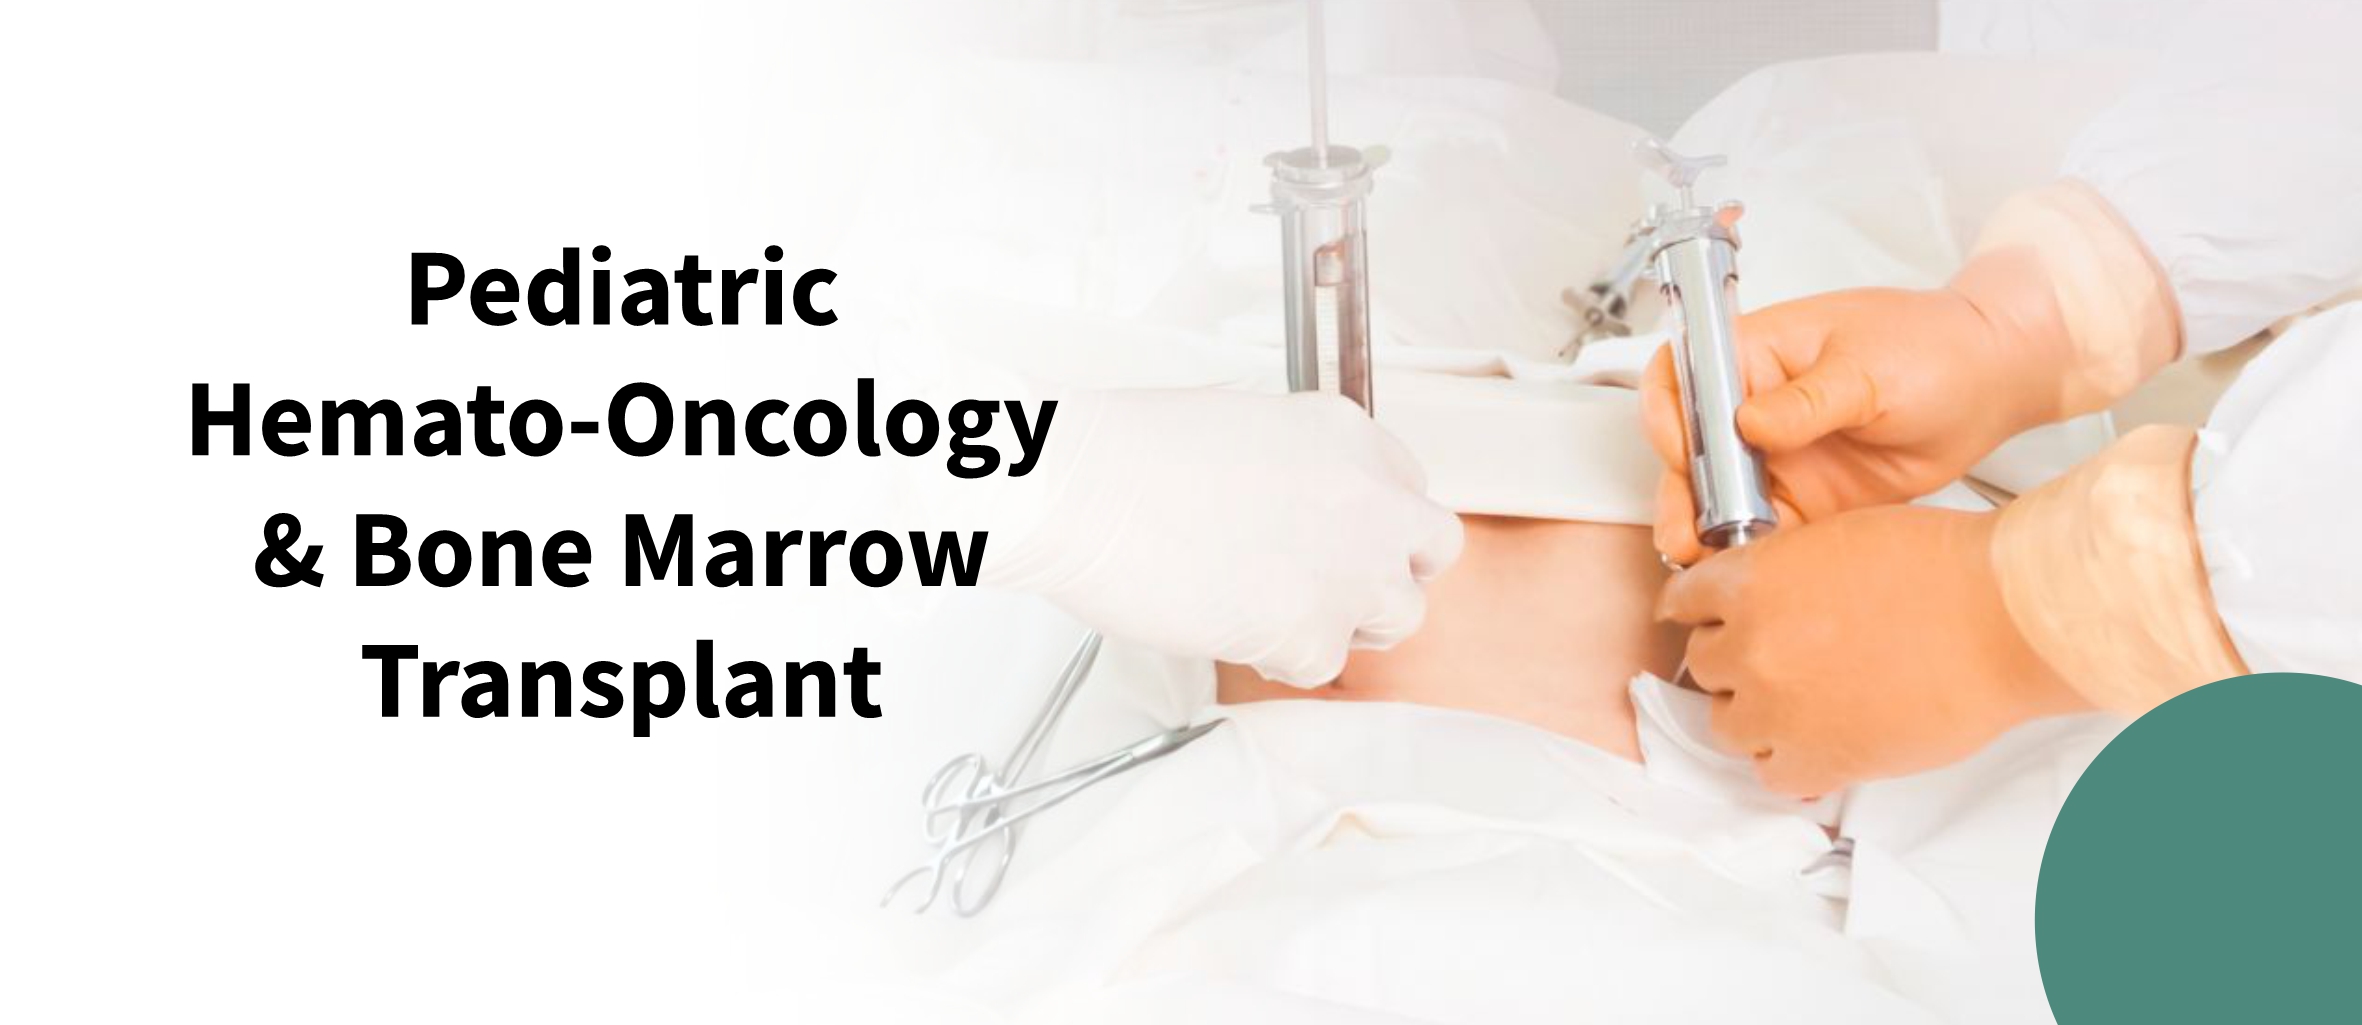 Pediatric Hemato-Oncology & Bone Marrow Transplant